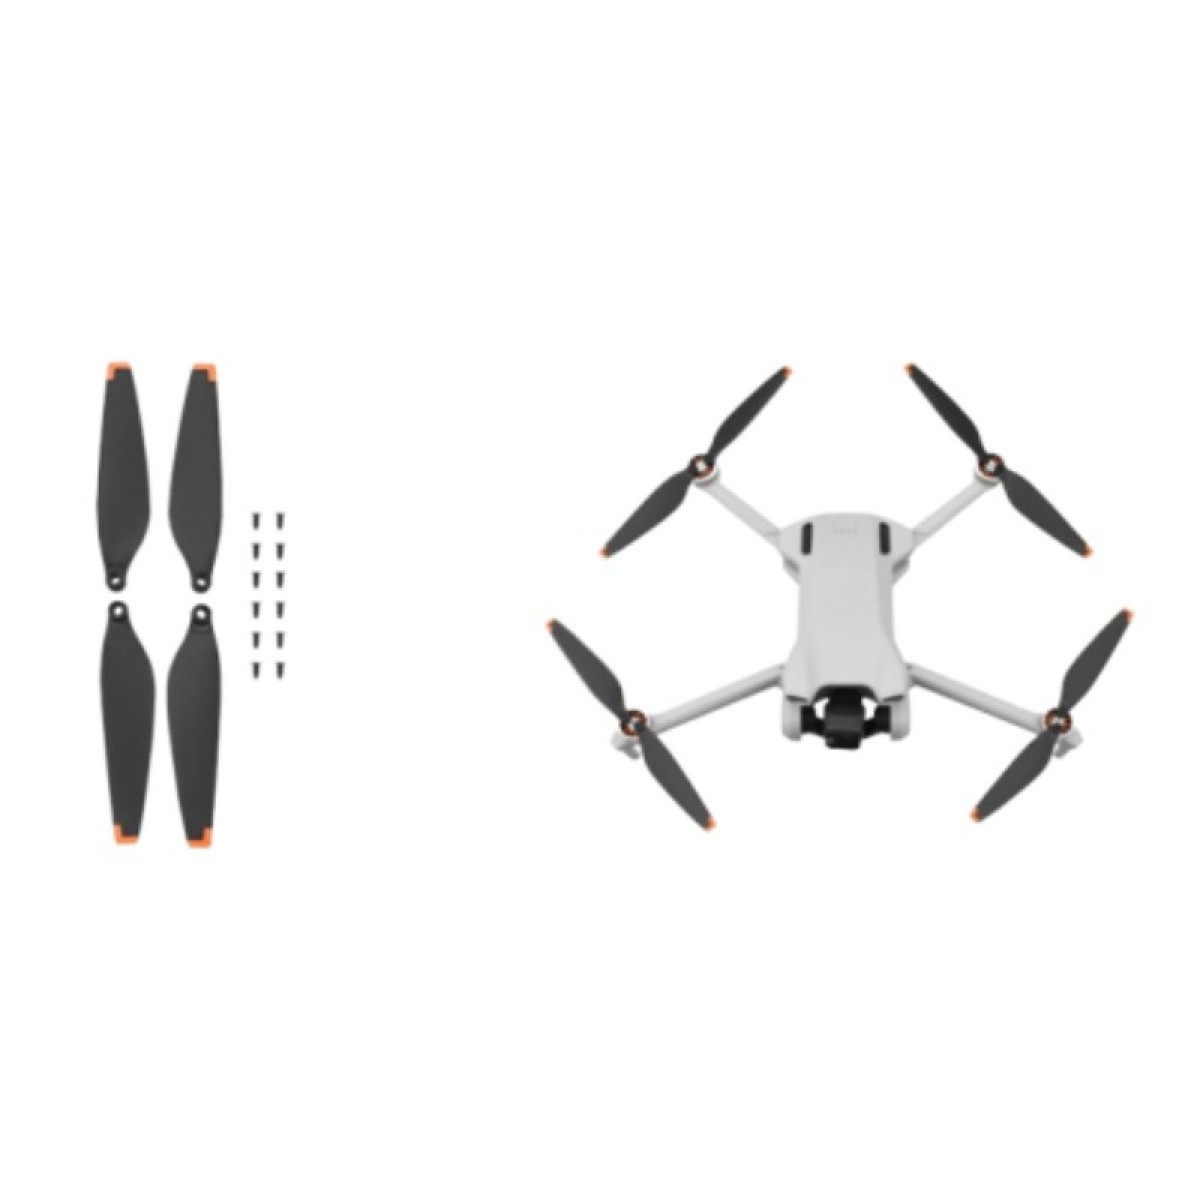 INF leicht, geräuscharm, Paar Propeller, Orange Ersatz-Drohnenpropeller, 2